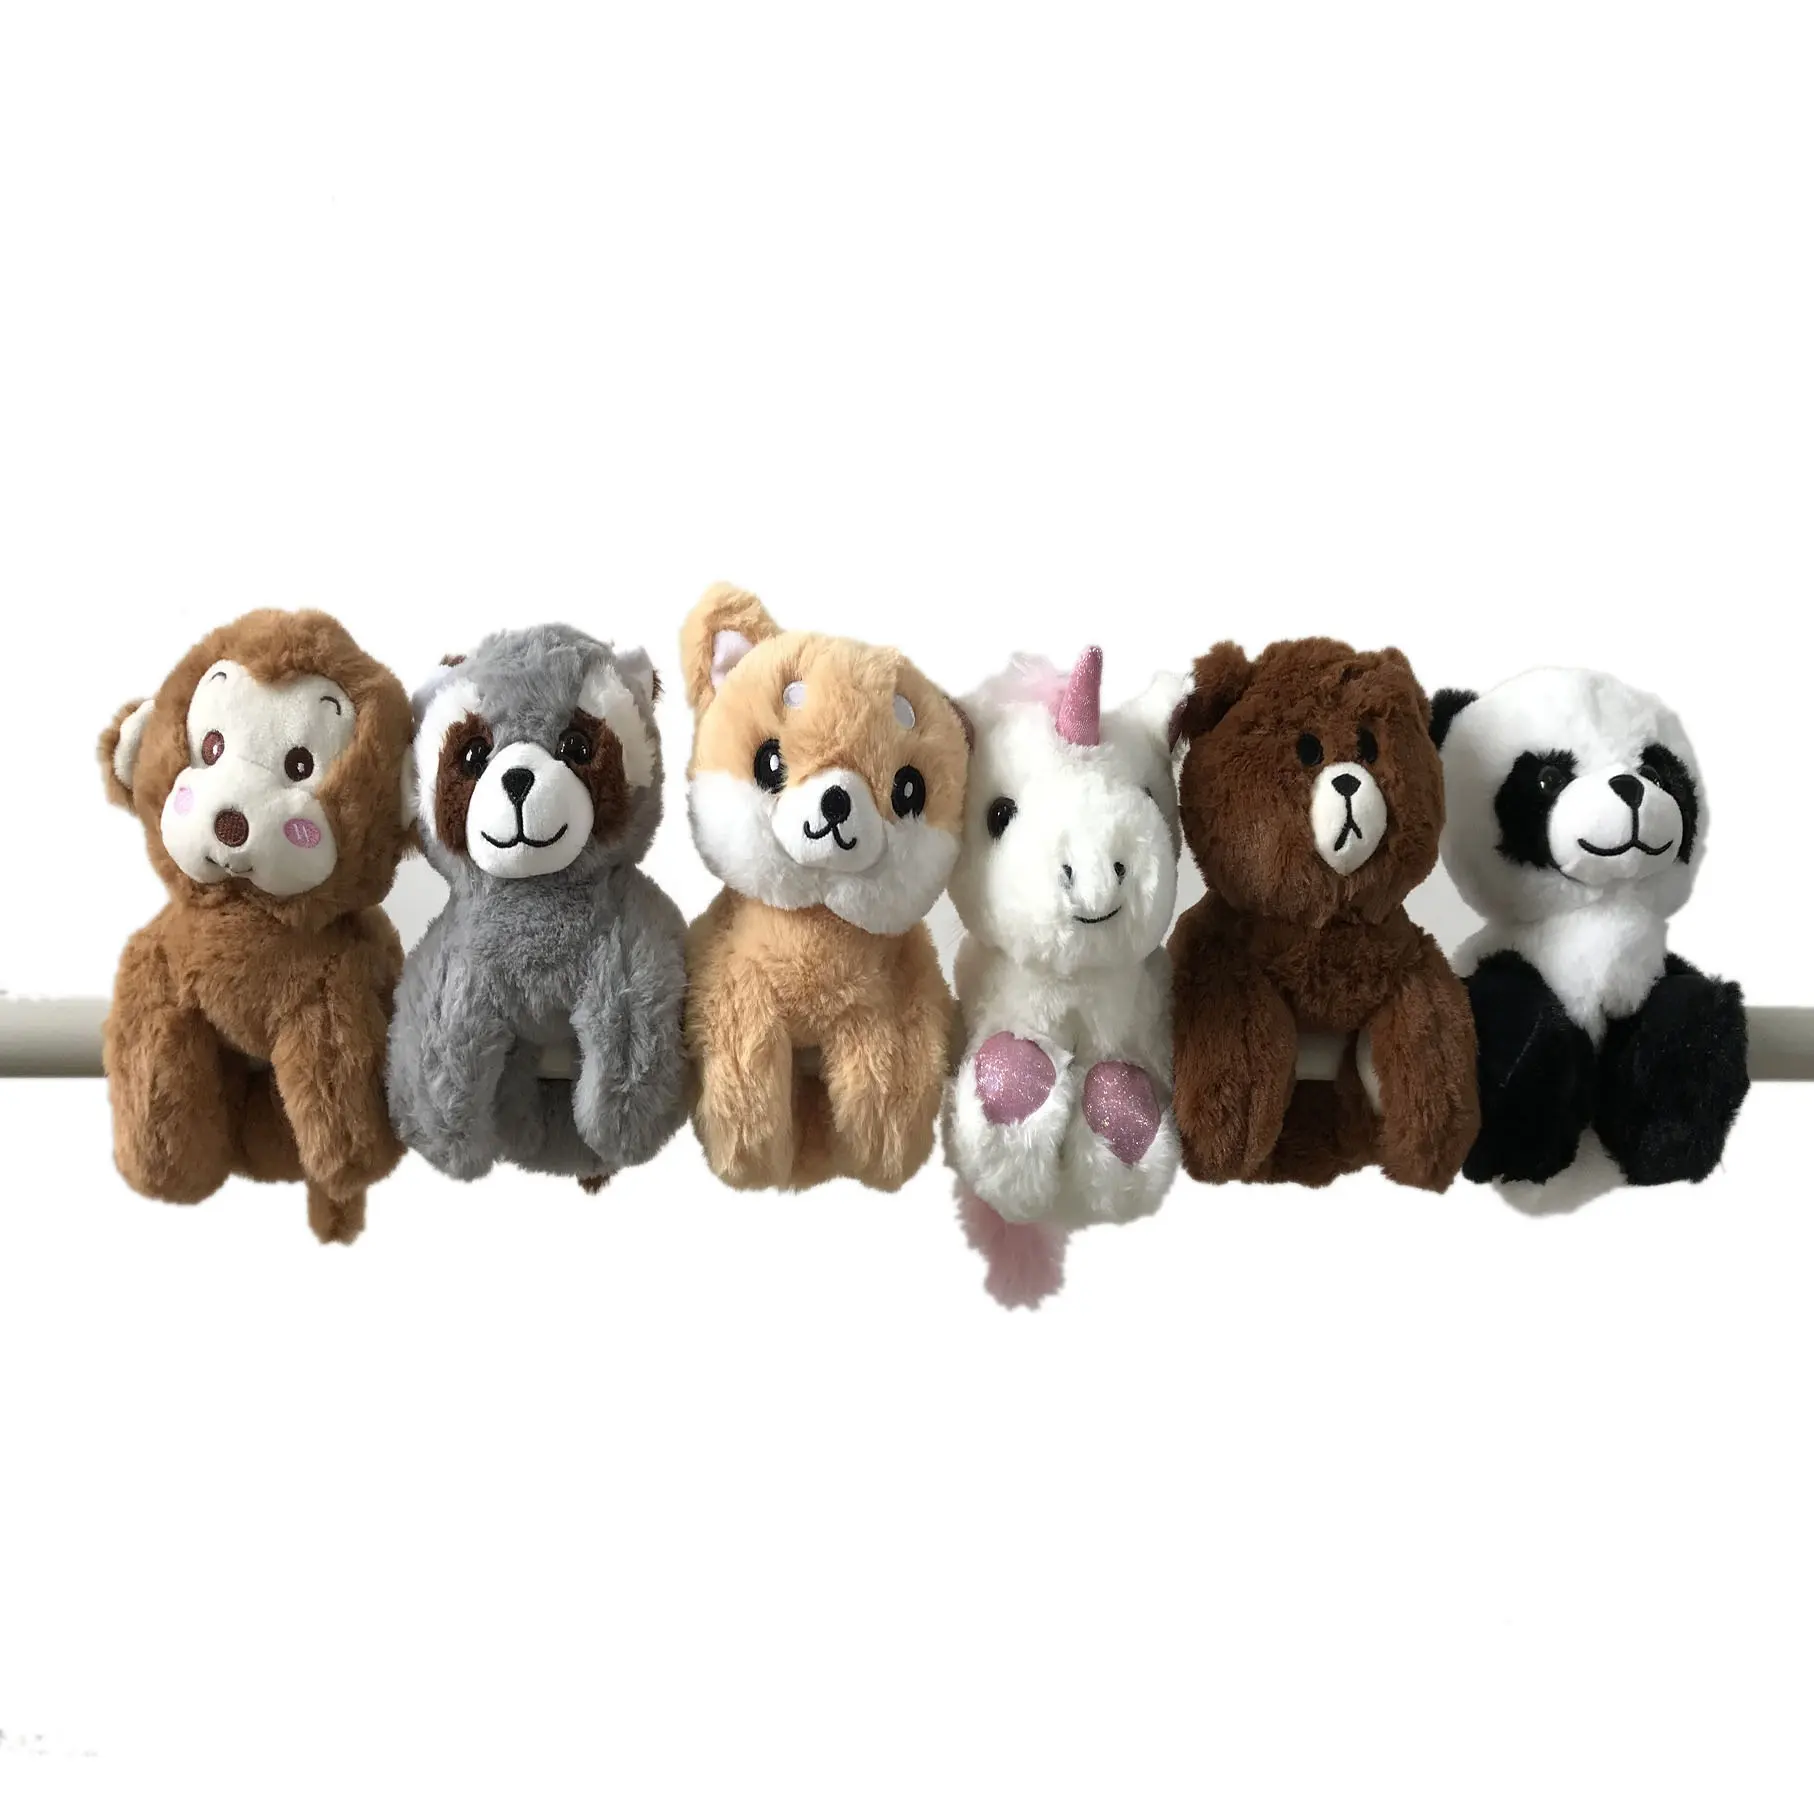 Slapbands interattivi Panda peluche animali vendita calda di alta qualità clap ring toy per bambini